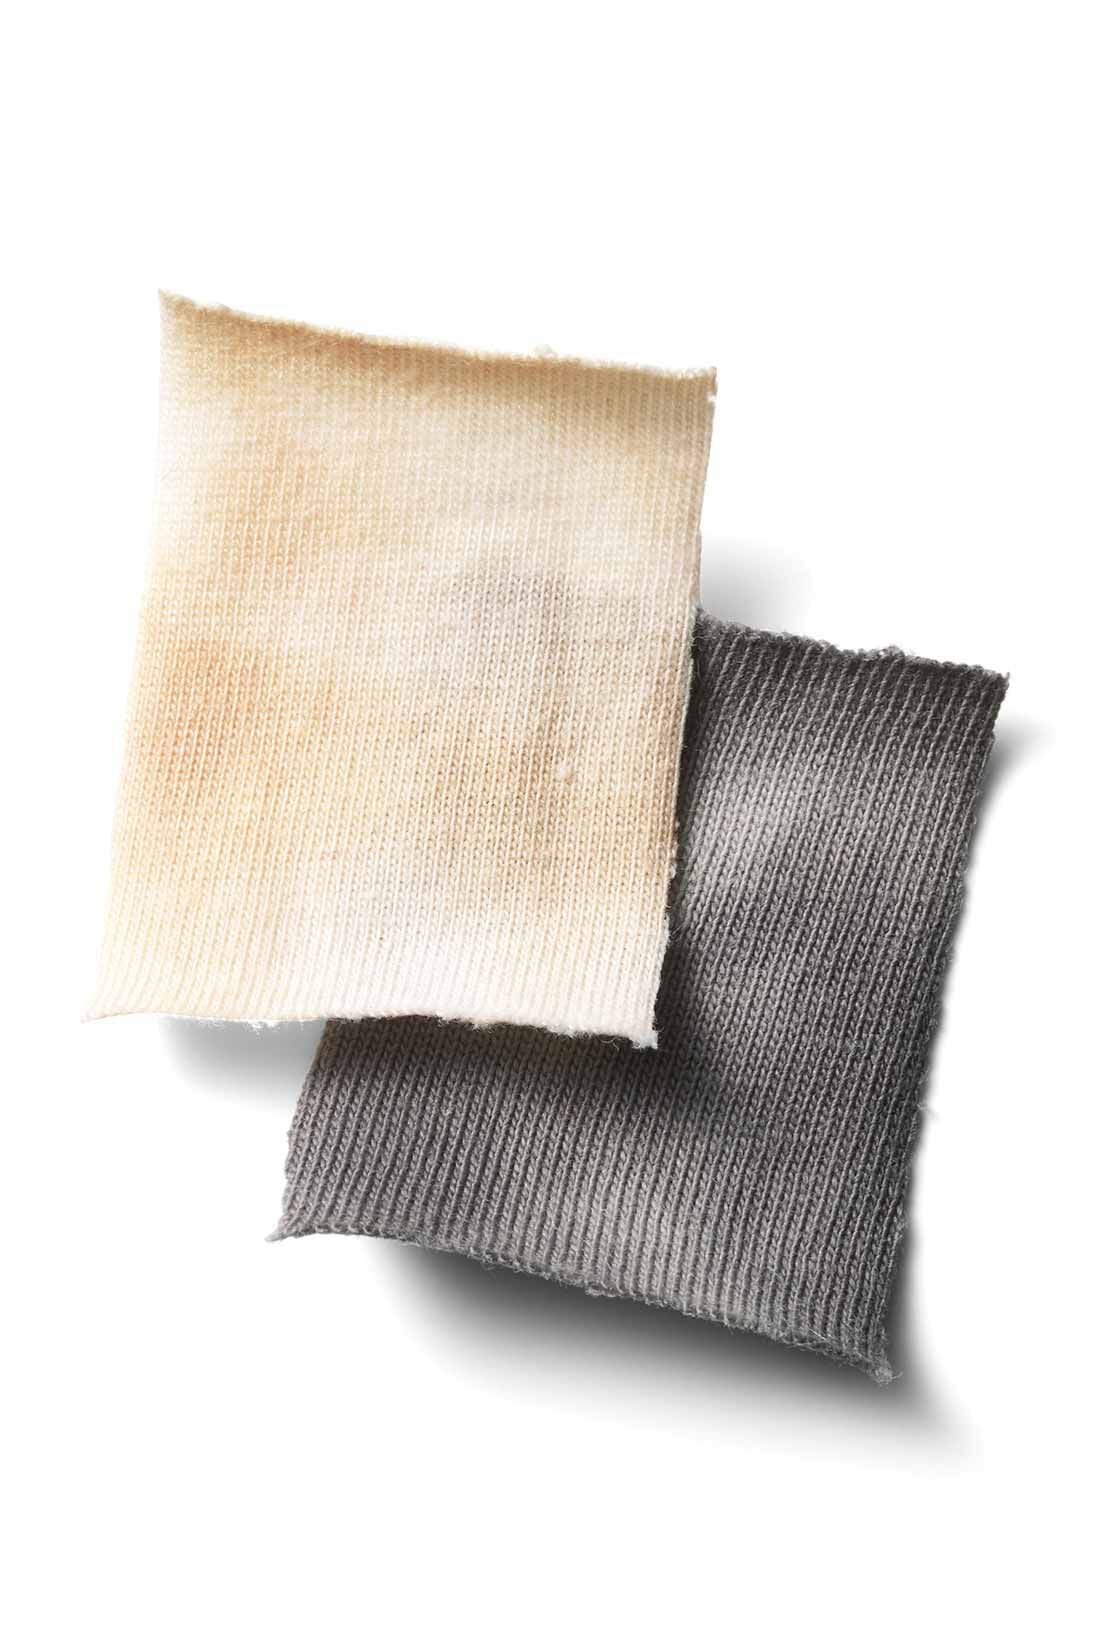 MEDE19F|MEDE19F　タイダイTシャツ〈チャコール〉|適度な厚みのある、ナチュラルな綿100％のカットソー。洗っても型くずれしにくい素材です。